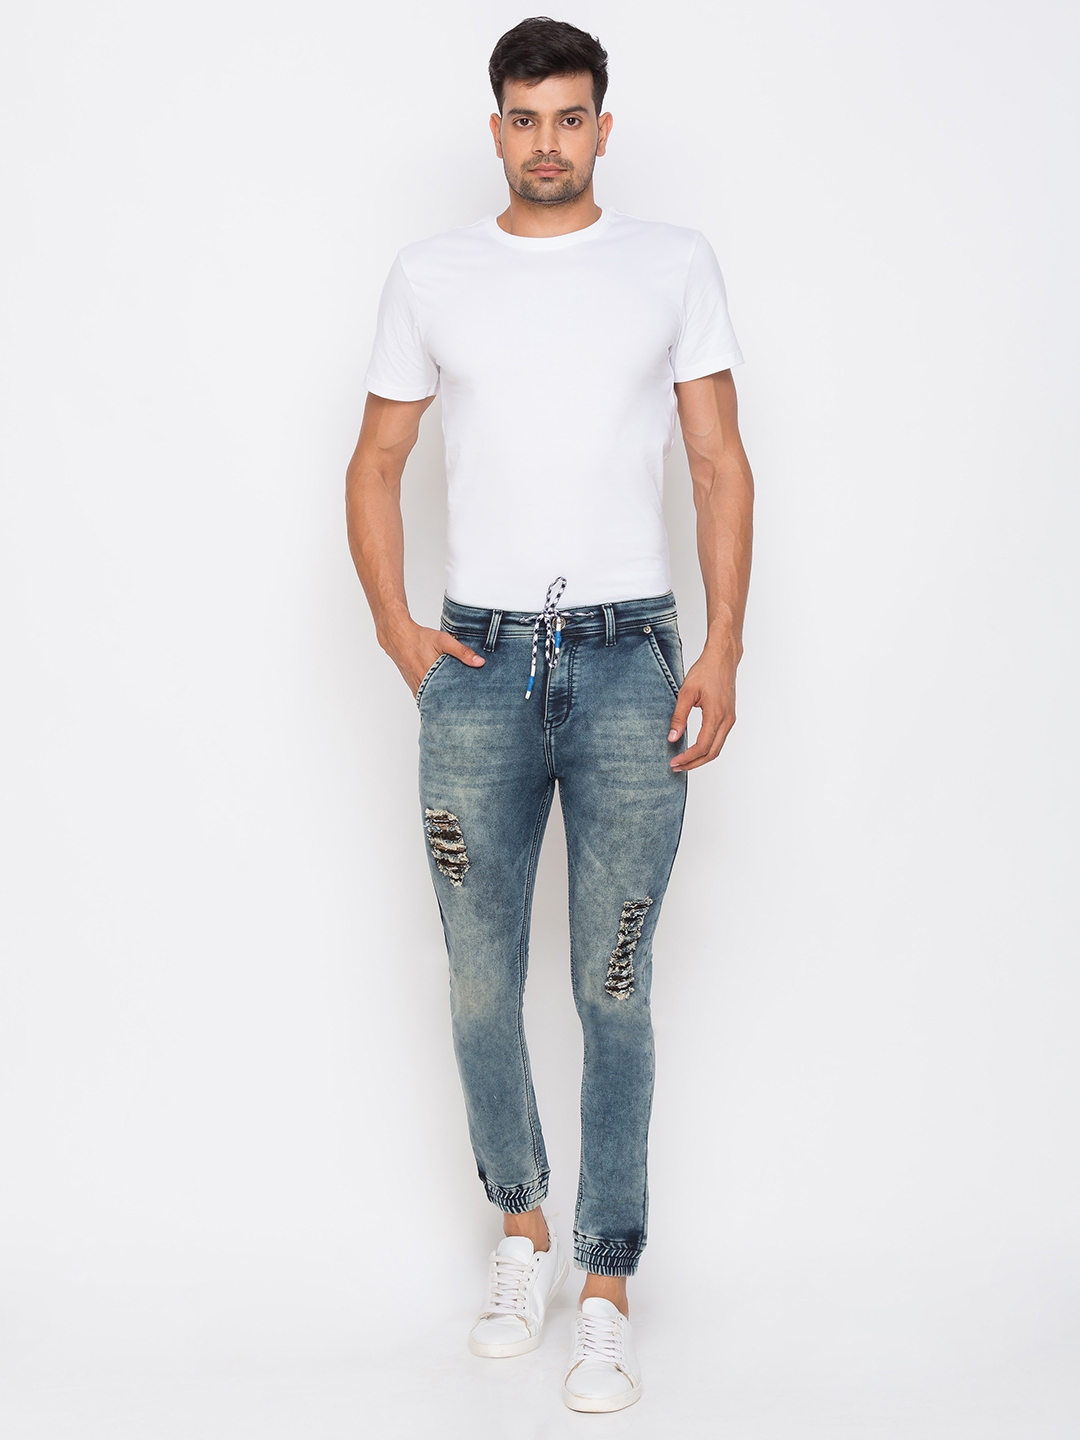 globus | Men's Blue Denim Solid Joggers Jeans 4